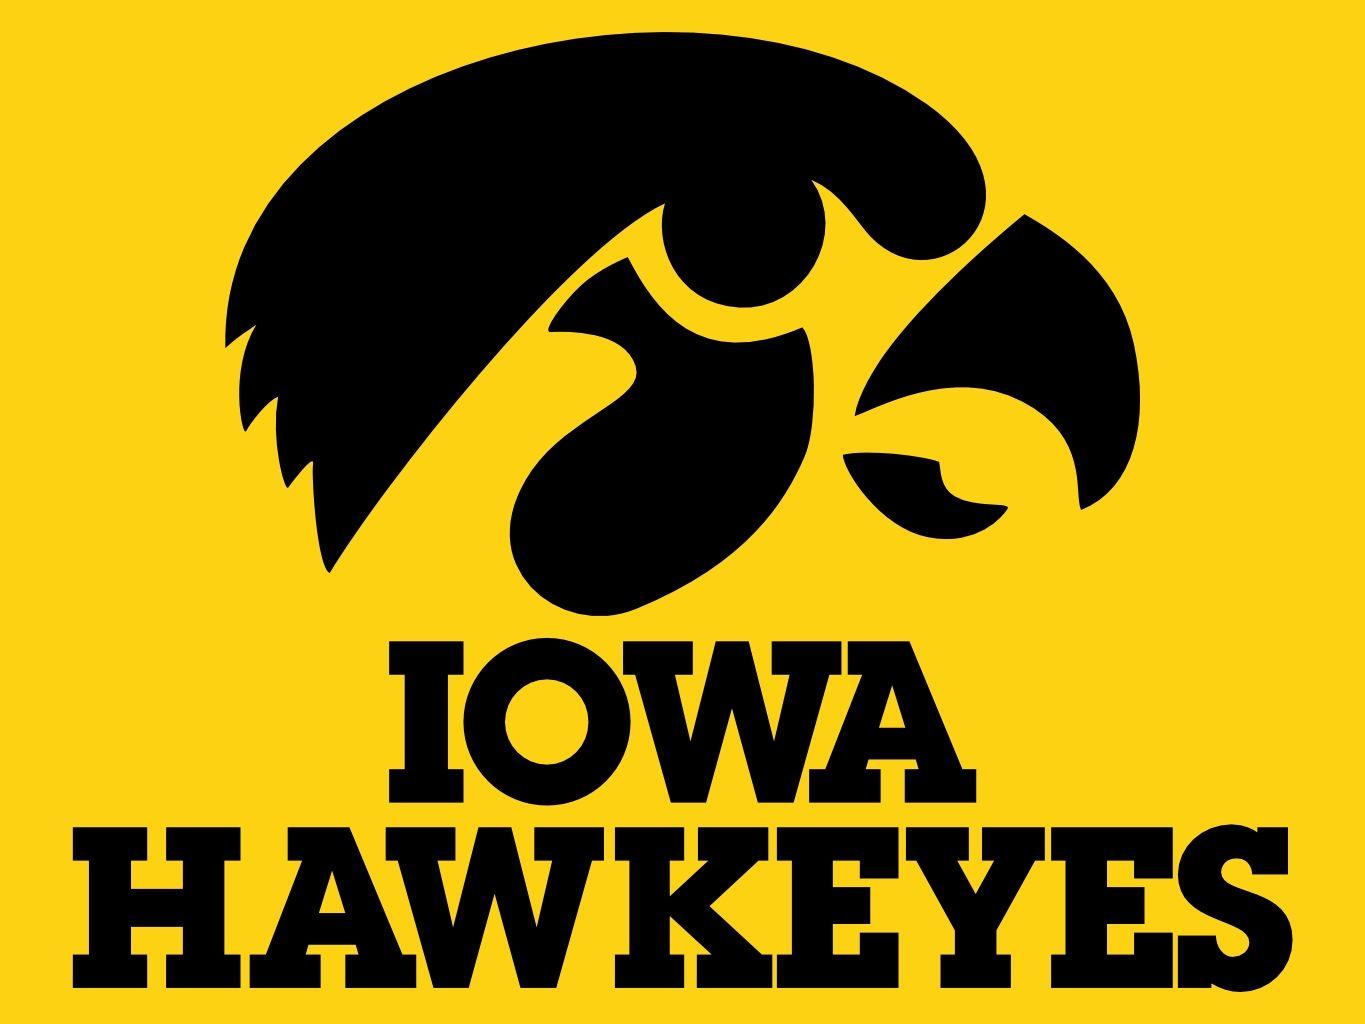 Iowa Hawkeye Logo / Driveway Stencils Iowa Hawkeyes Iowa Hawkeye logo